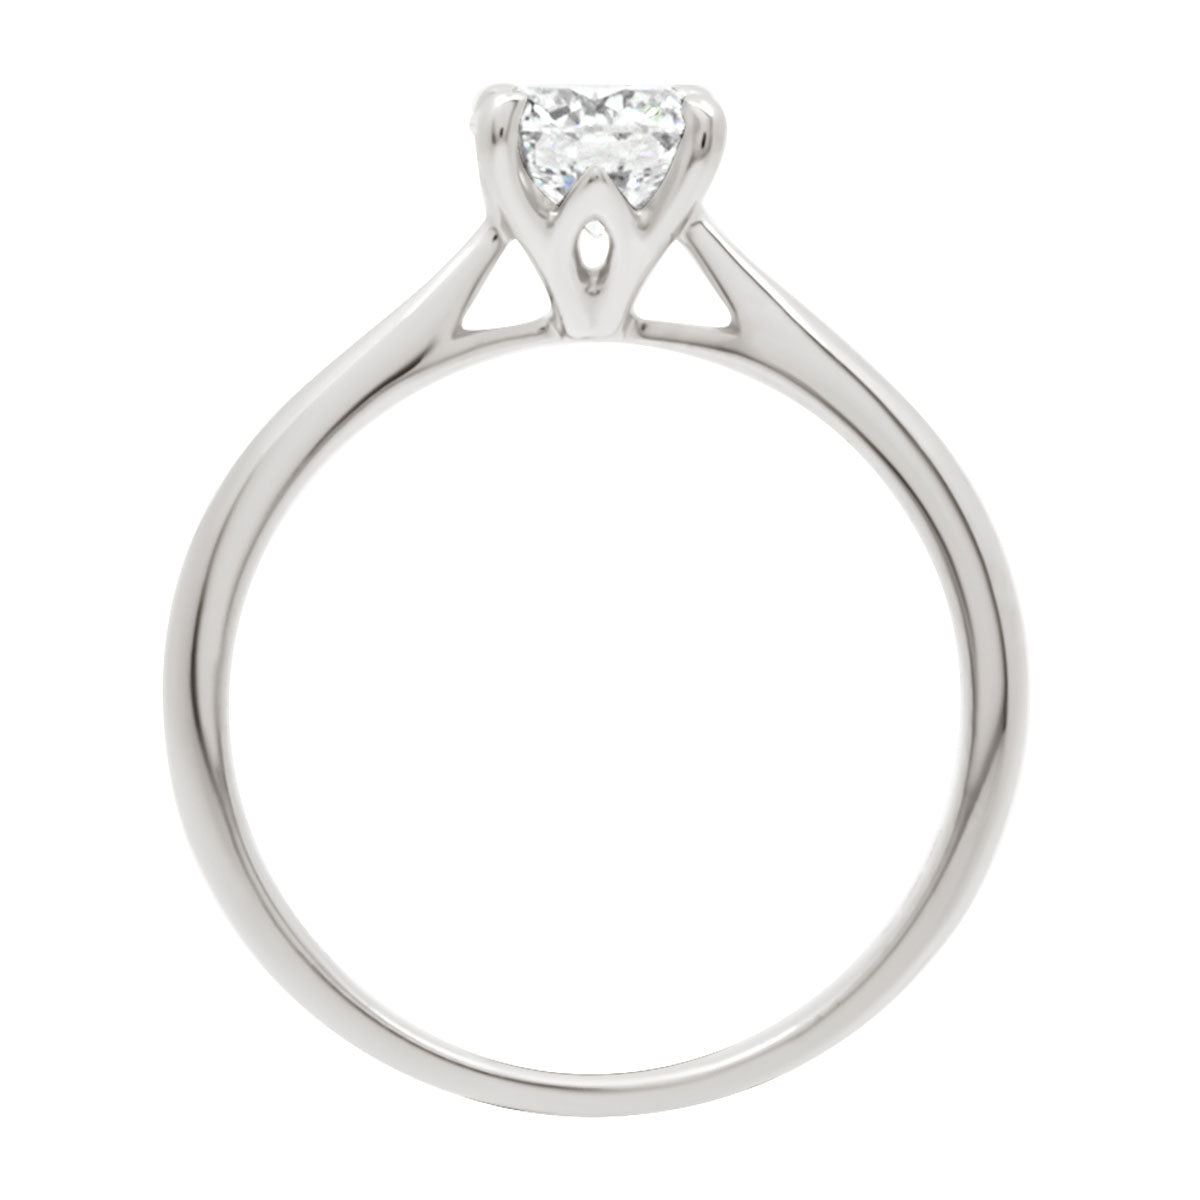 Hidden Diamond Detail engagement ring in white gold standing upright